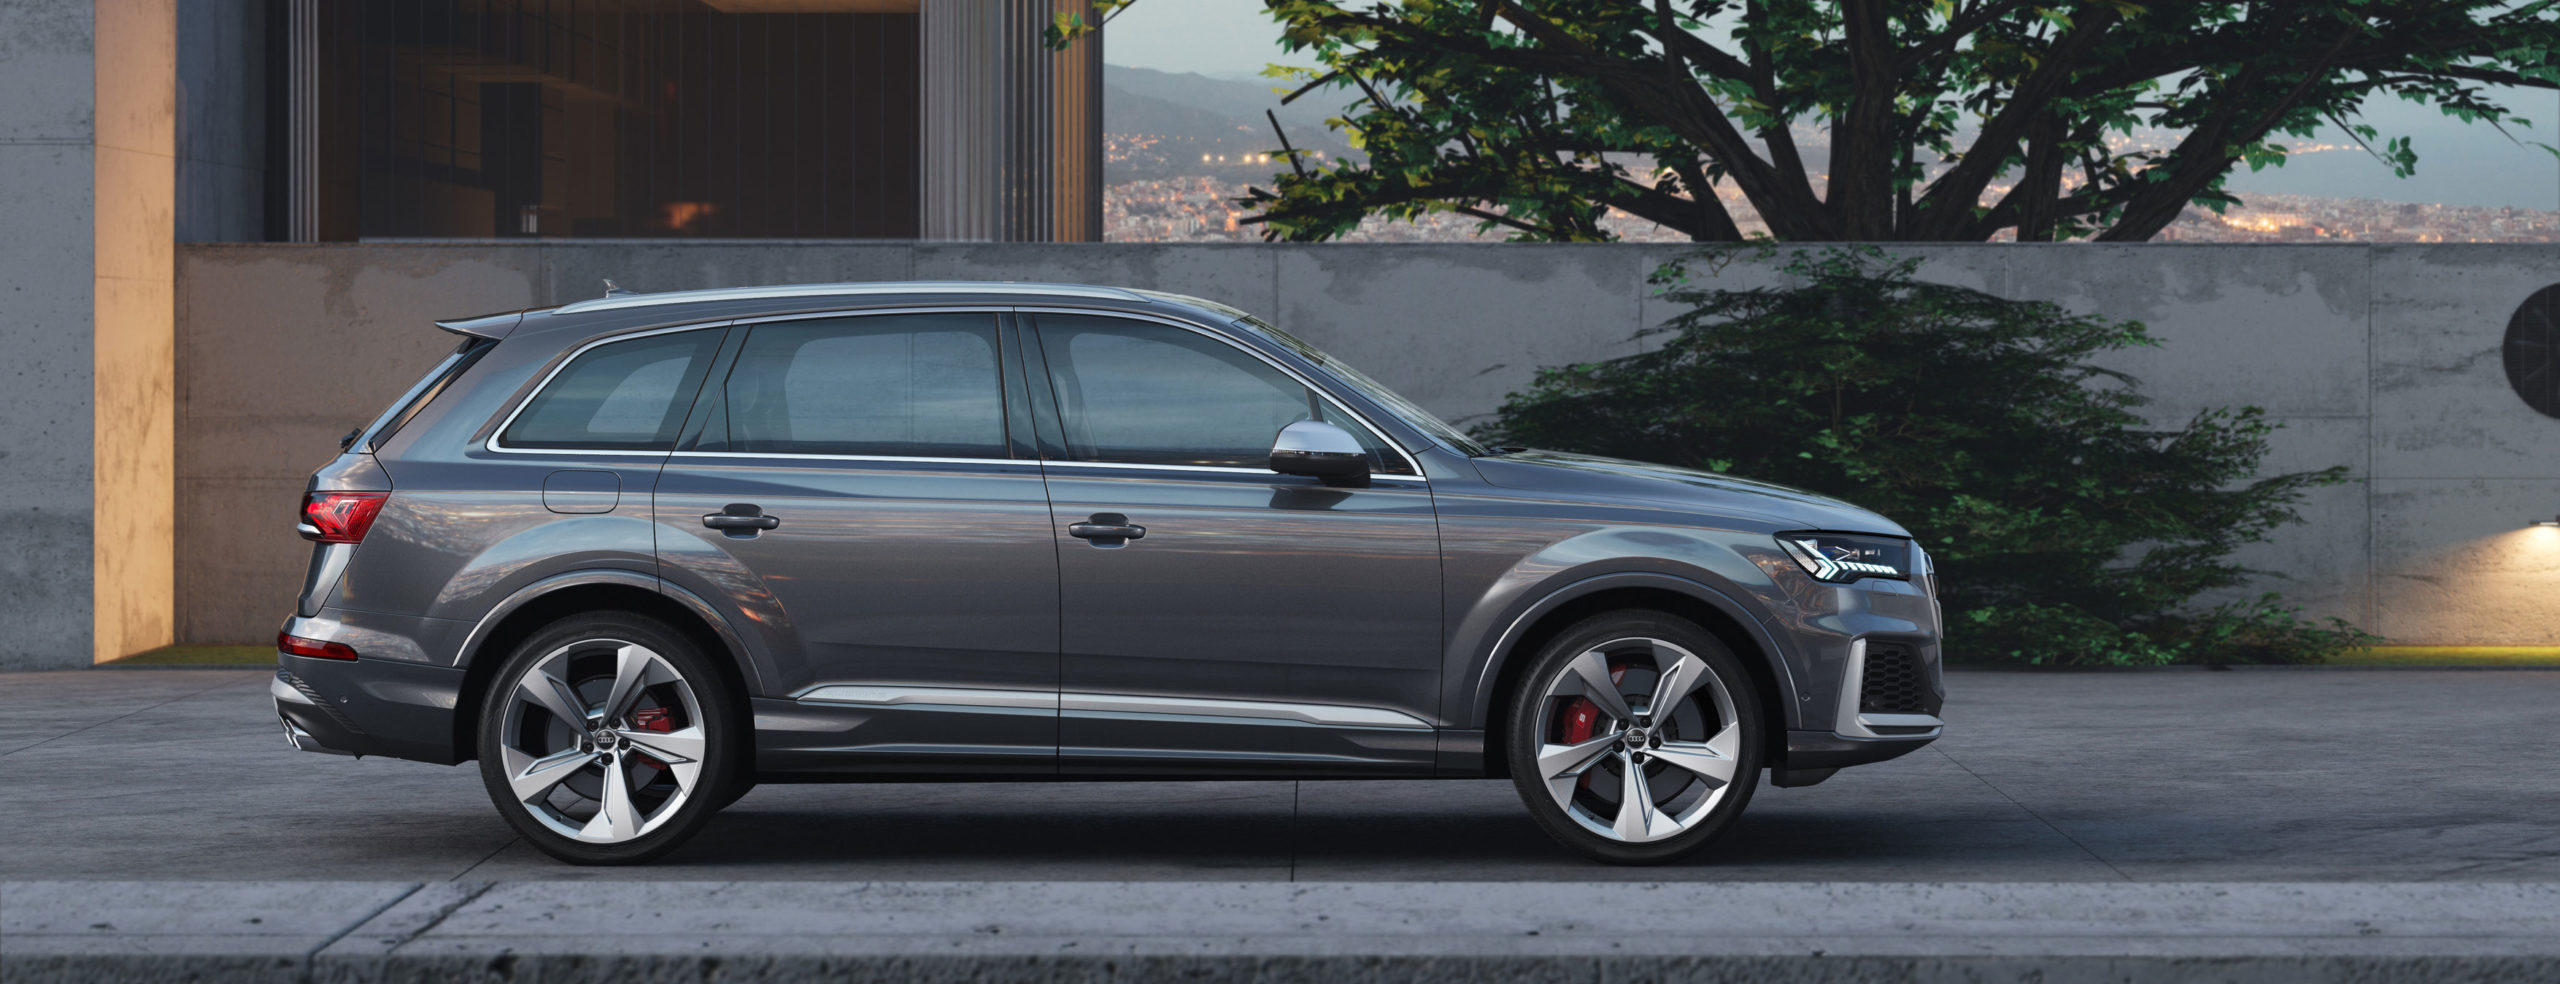 Audi SQ7 ya a la venta en el mercado español